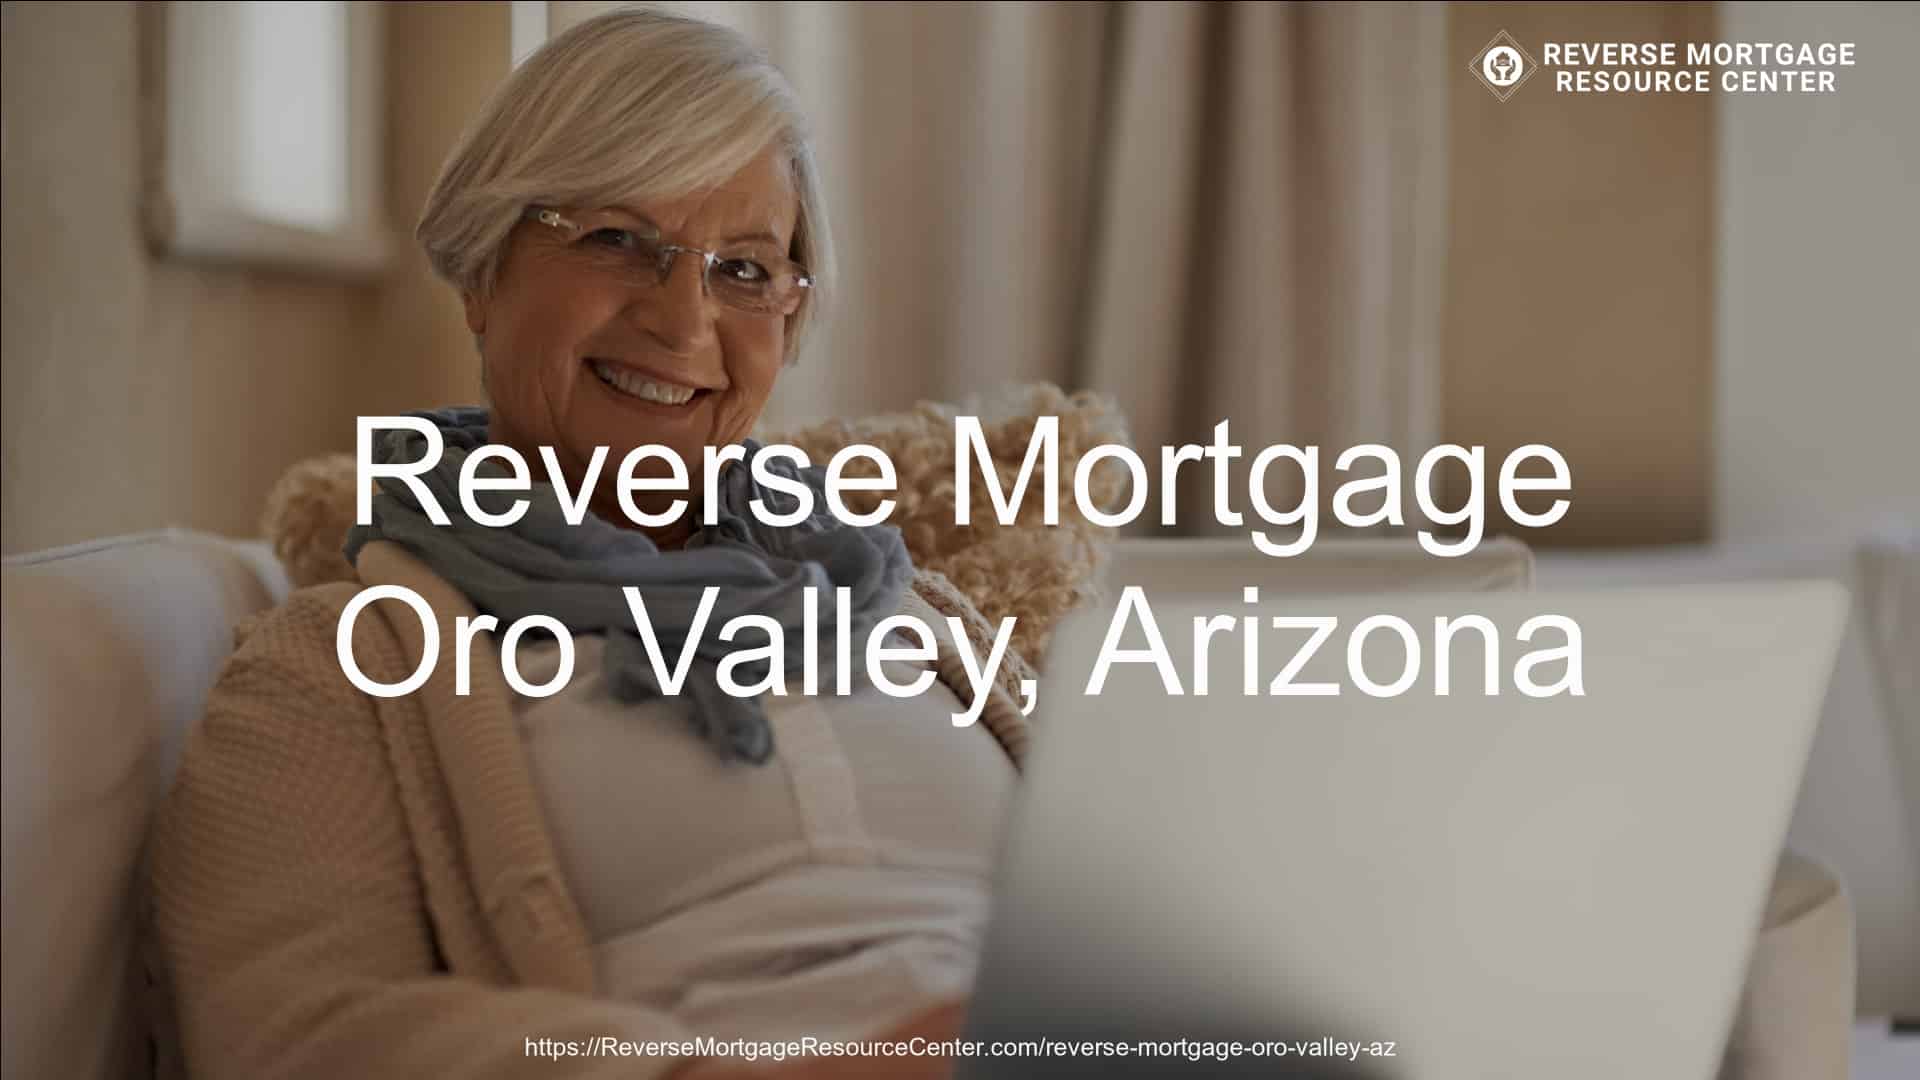 Reverse Mortgage Loans in Oro Valley Arizona